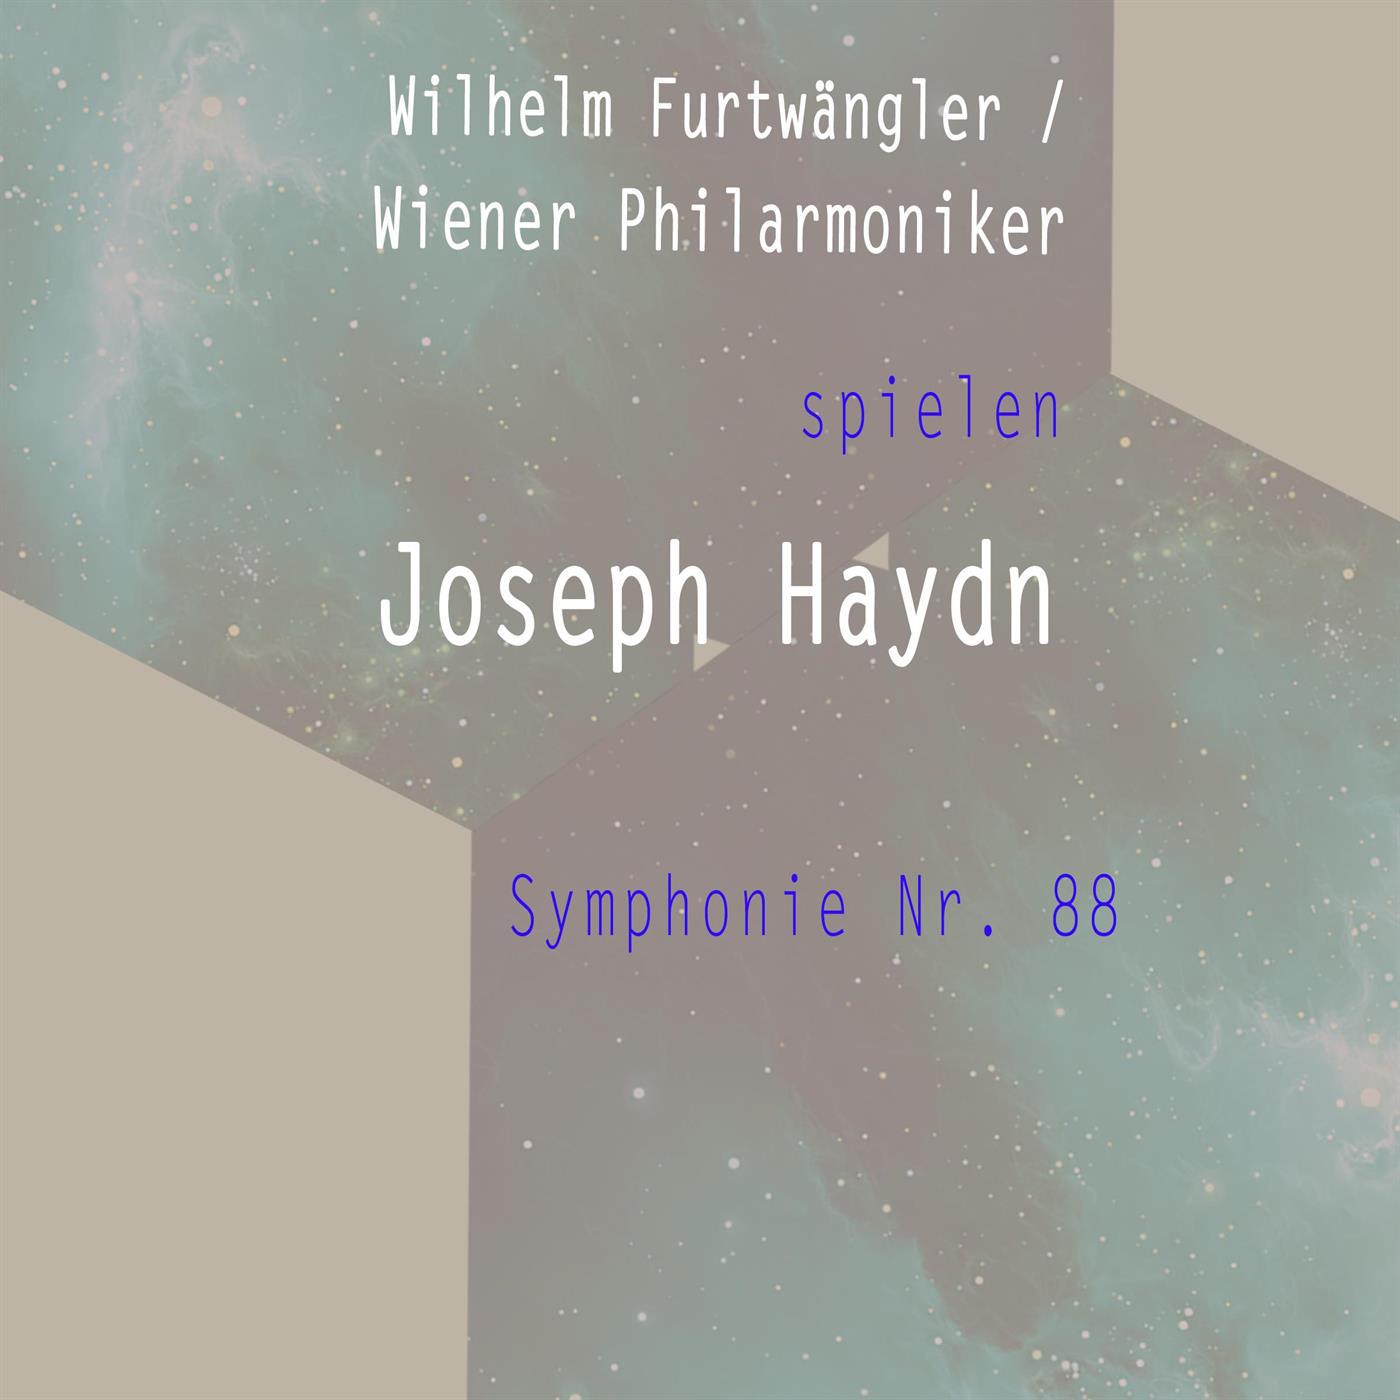 Wilhelm Furtwängler / Wiener Philarmoniker spielen: Joseph Haydn: Symphonie Nr. 88专辑